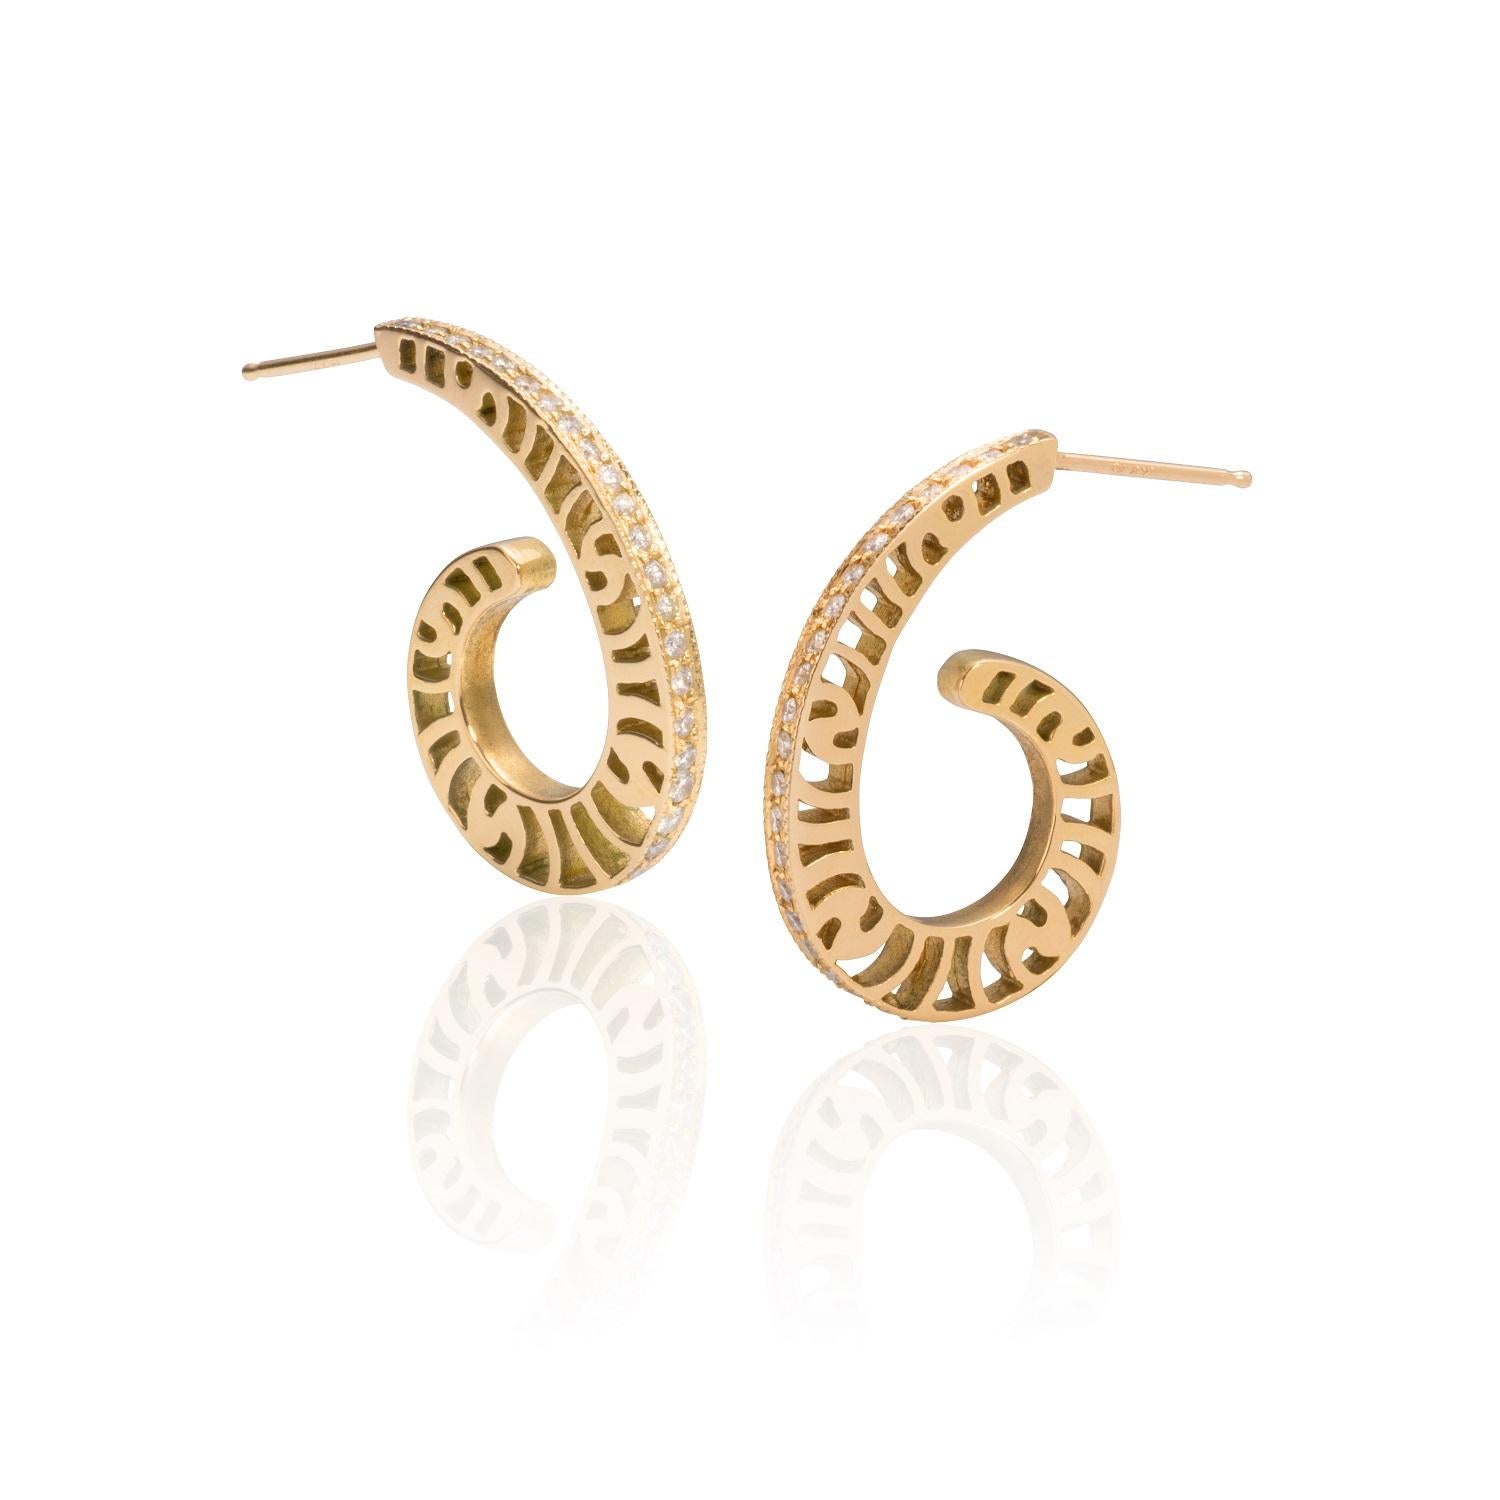 Round Cut 14 Karat Gold Hoop Earrings with Flush-Set Diamonds